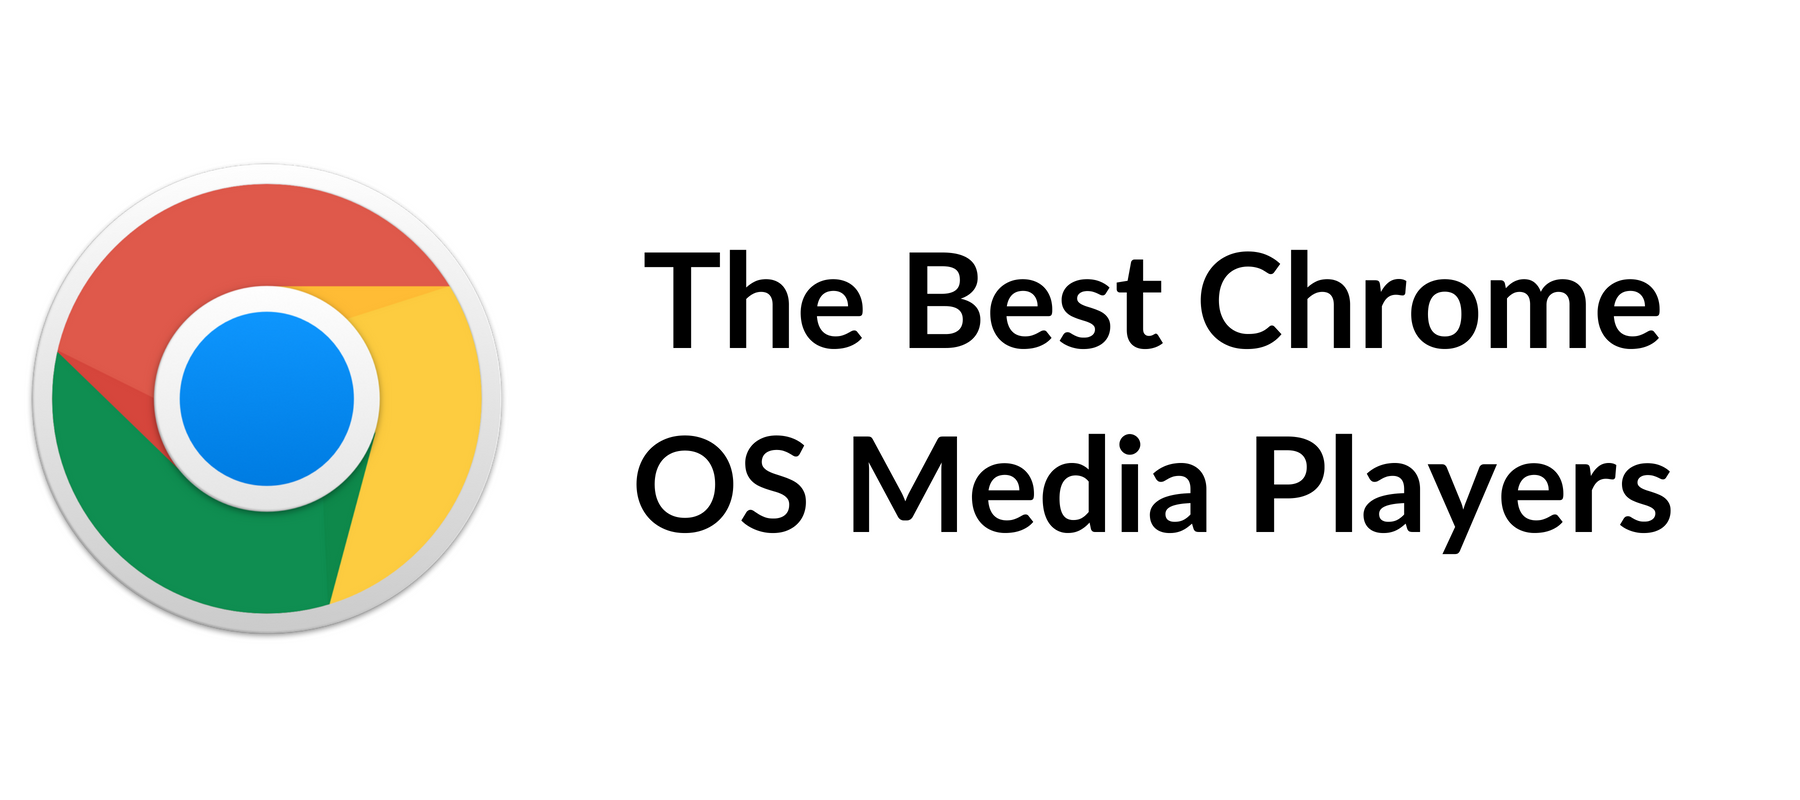 The Best Chrome OS Media Players